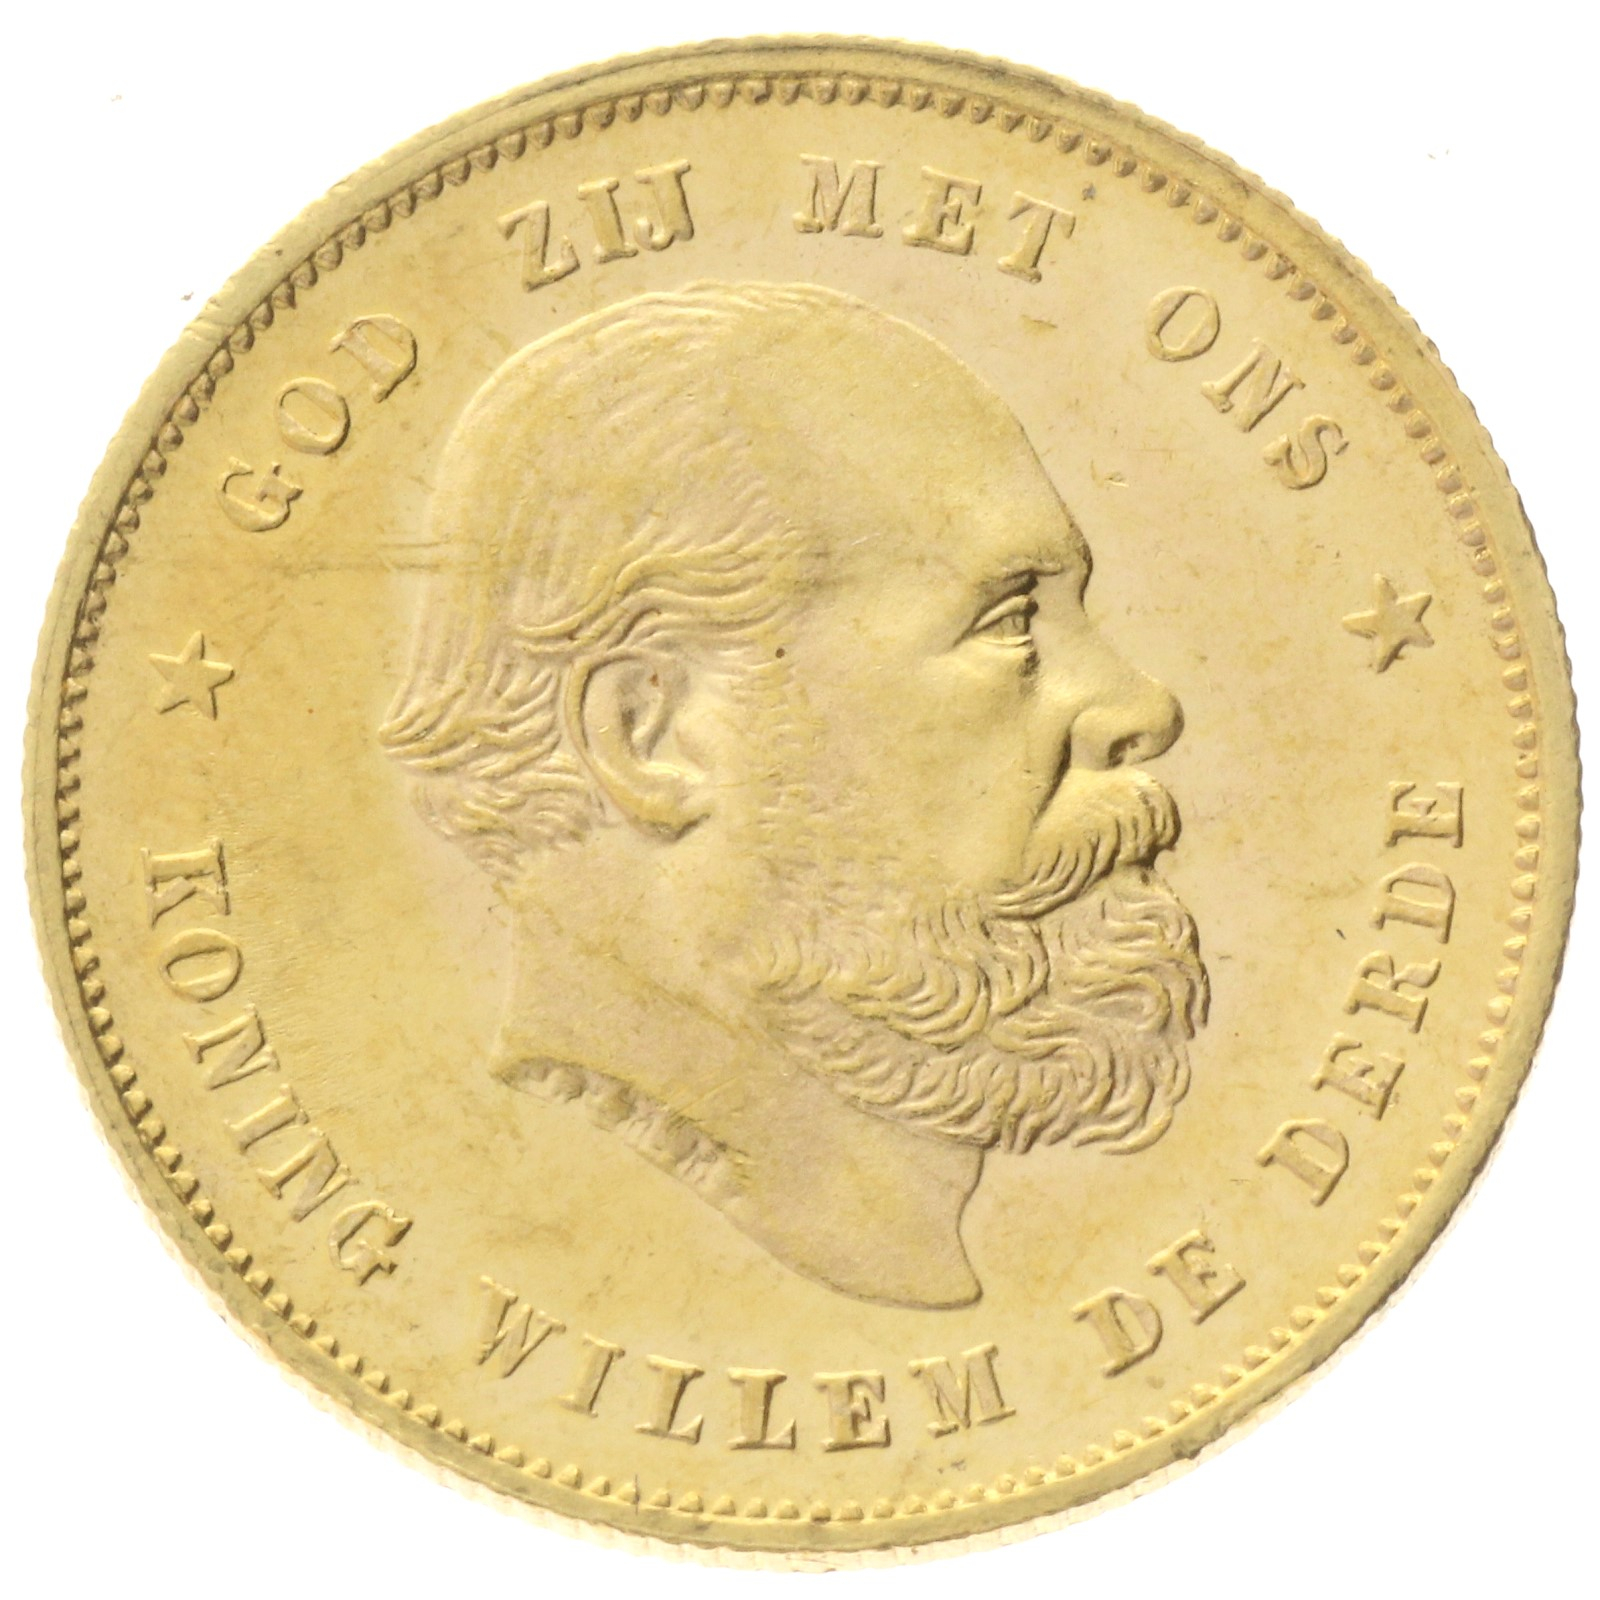 Netherlands - Willem III - 10 gulden - 1877